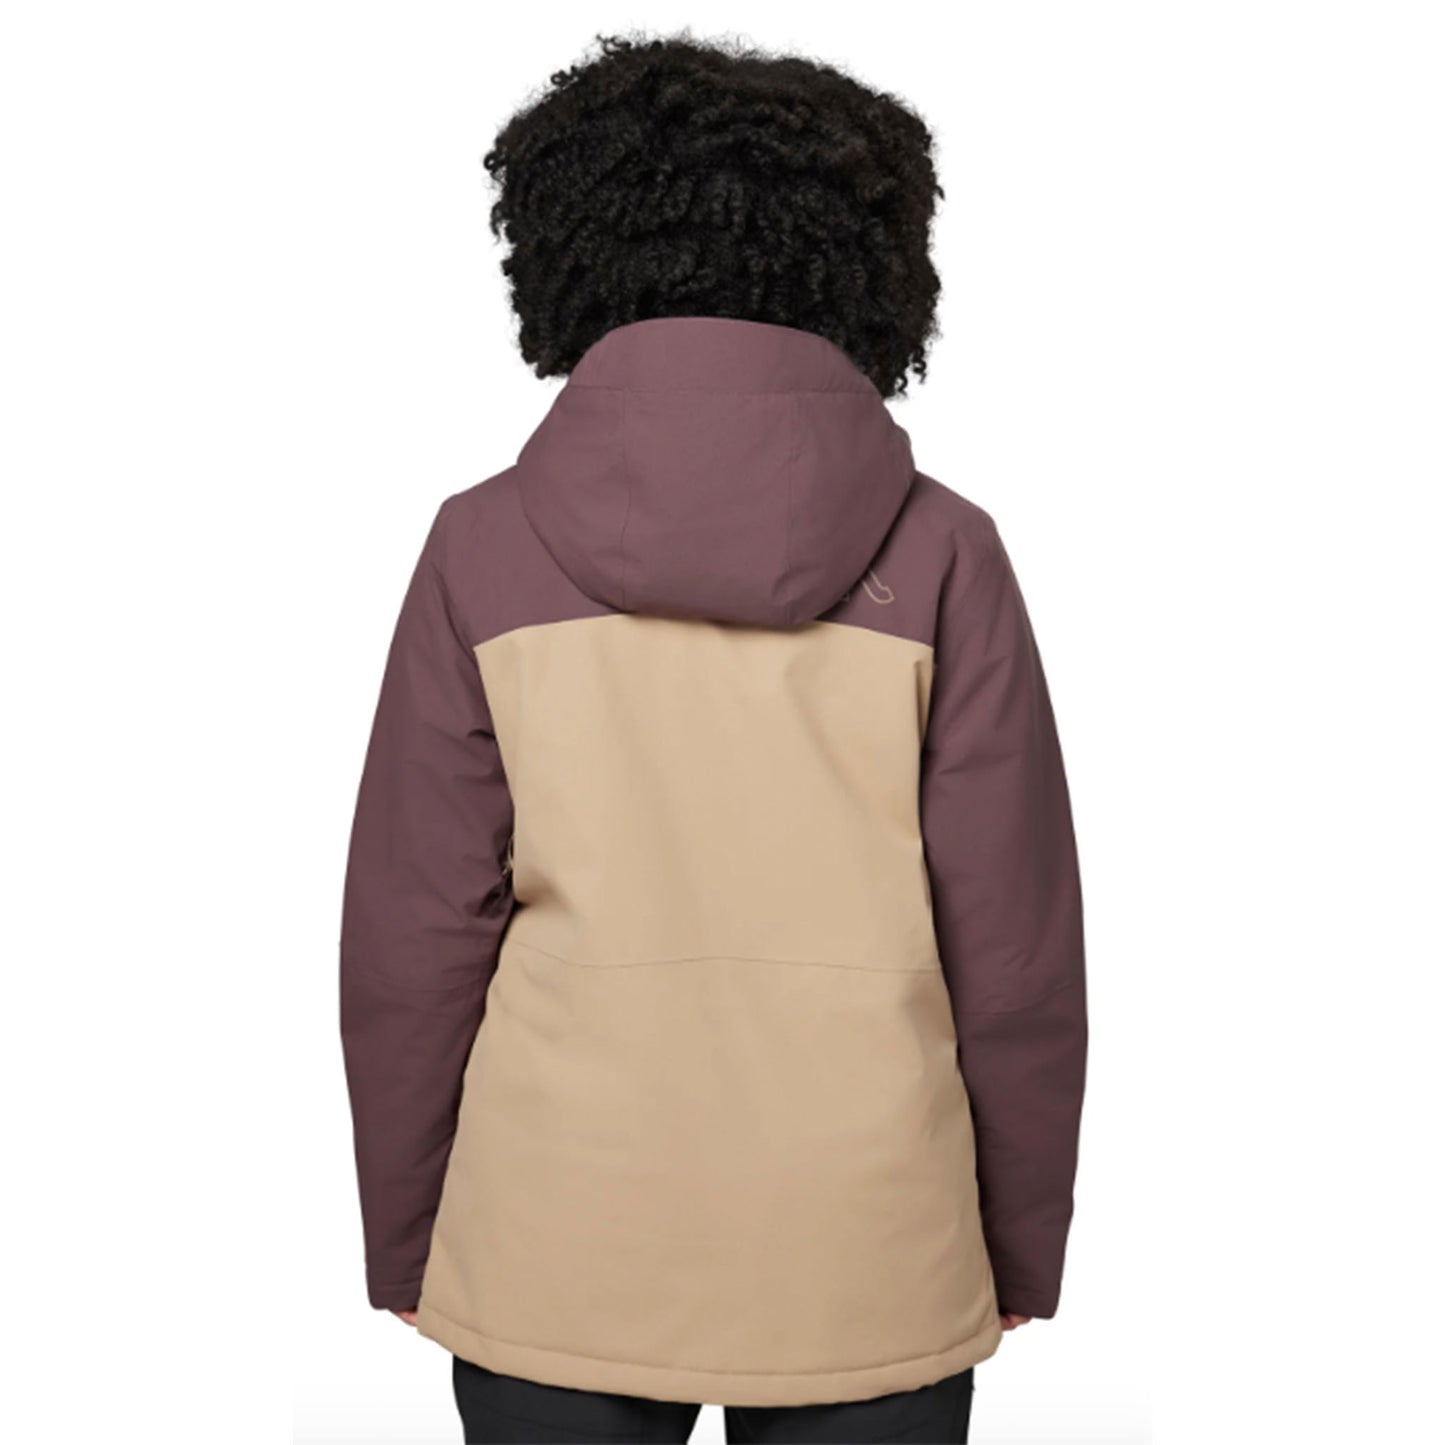 Flylow Women's Freya jacket in Galaxy/Chai